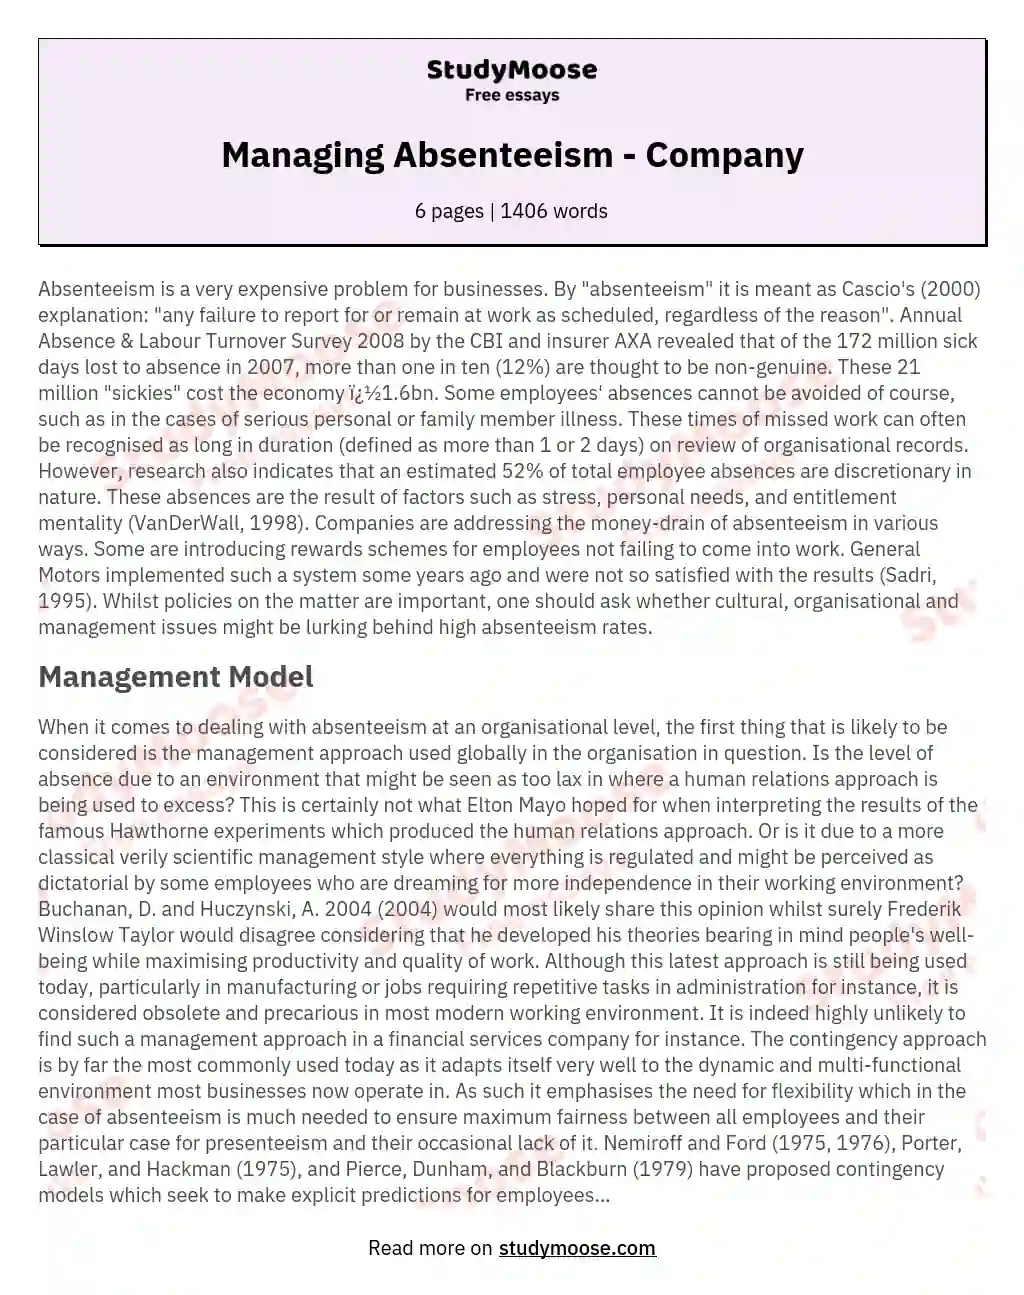 Managing Absenteeism - Company essay